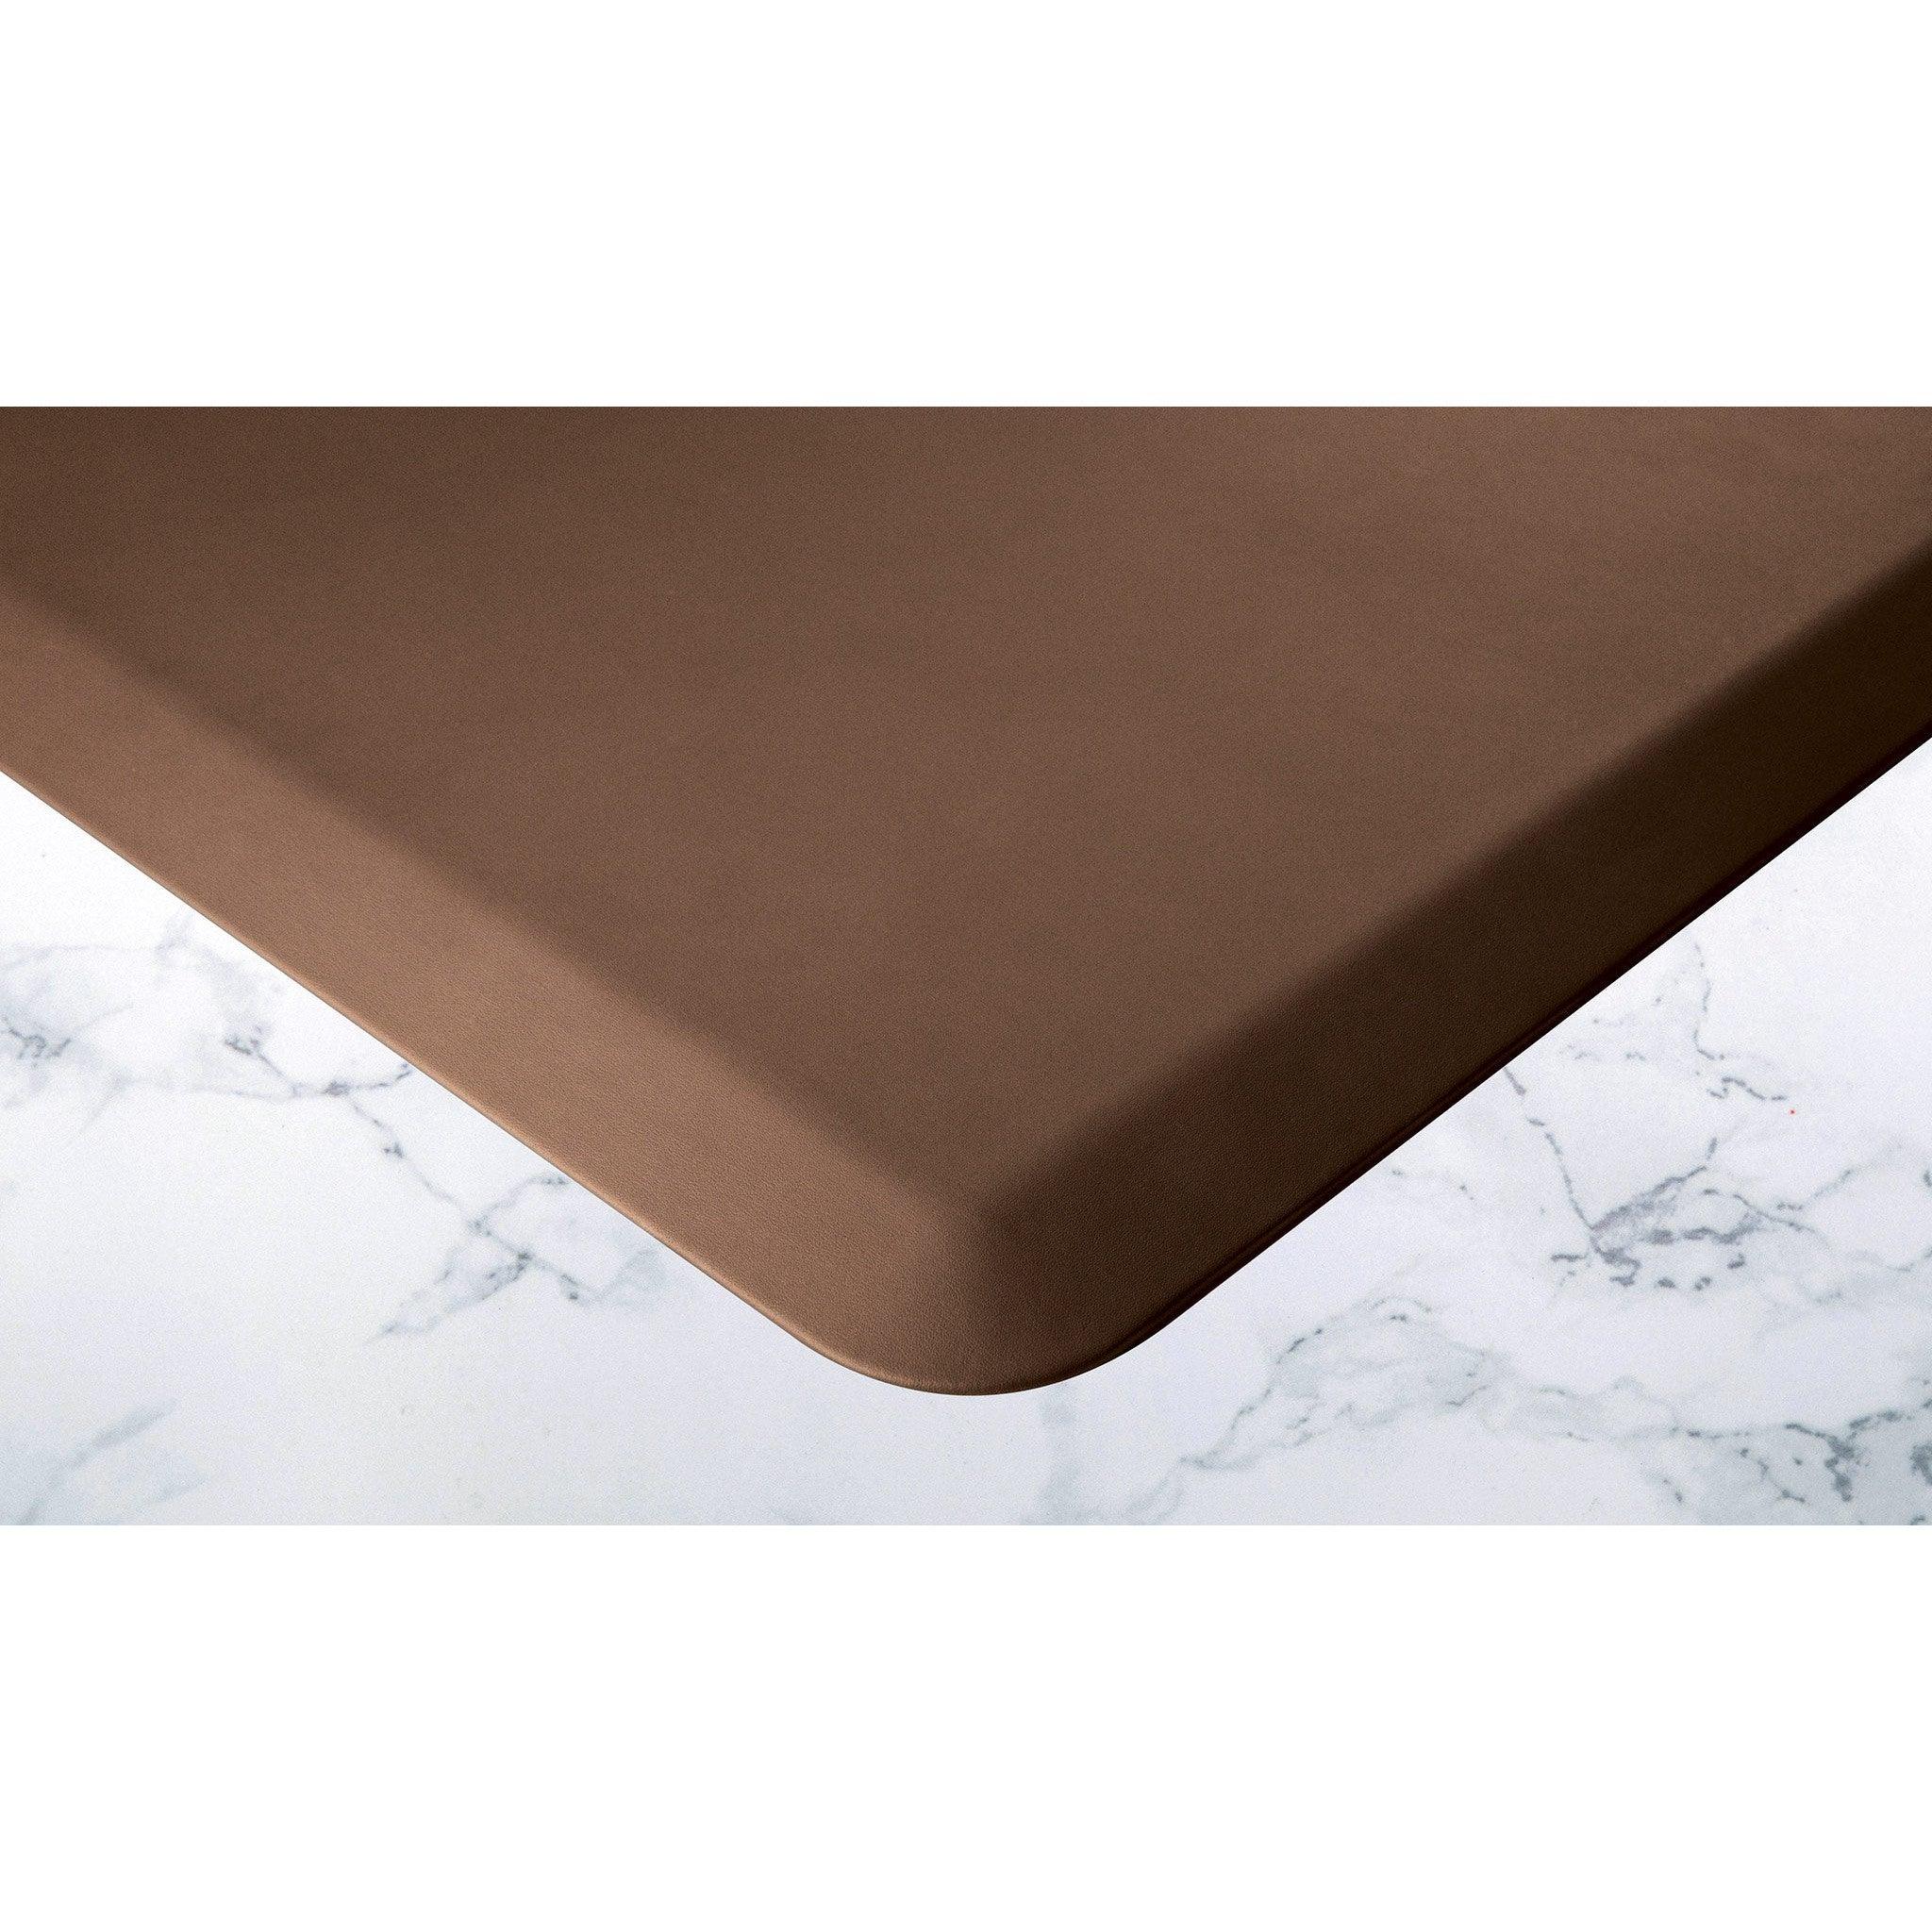 Bevel detail of brown EcoLast Premium Standing Mat